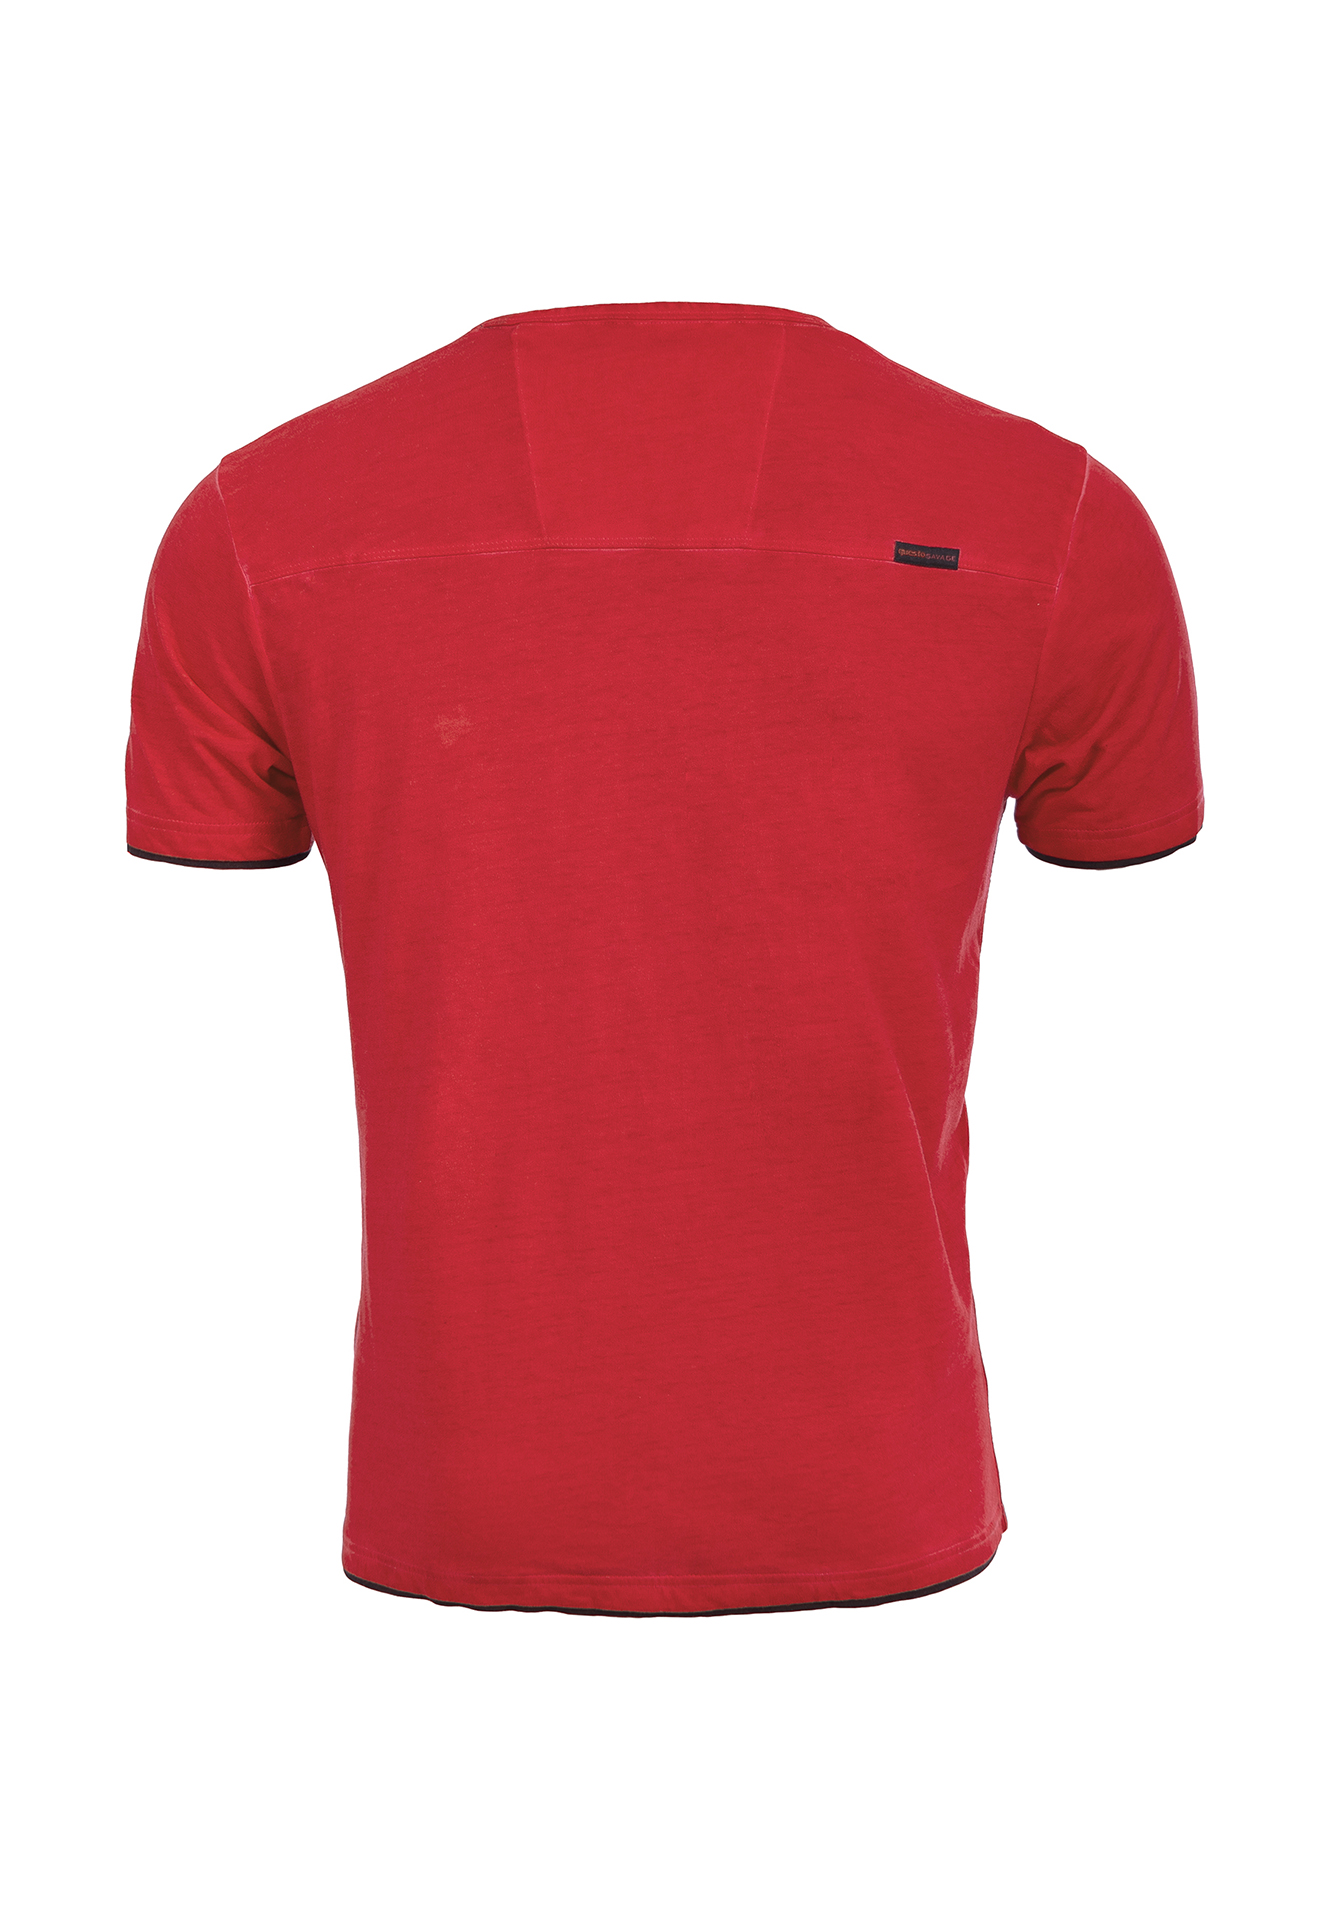 Questo Shirt Edis racing red